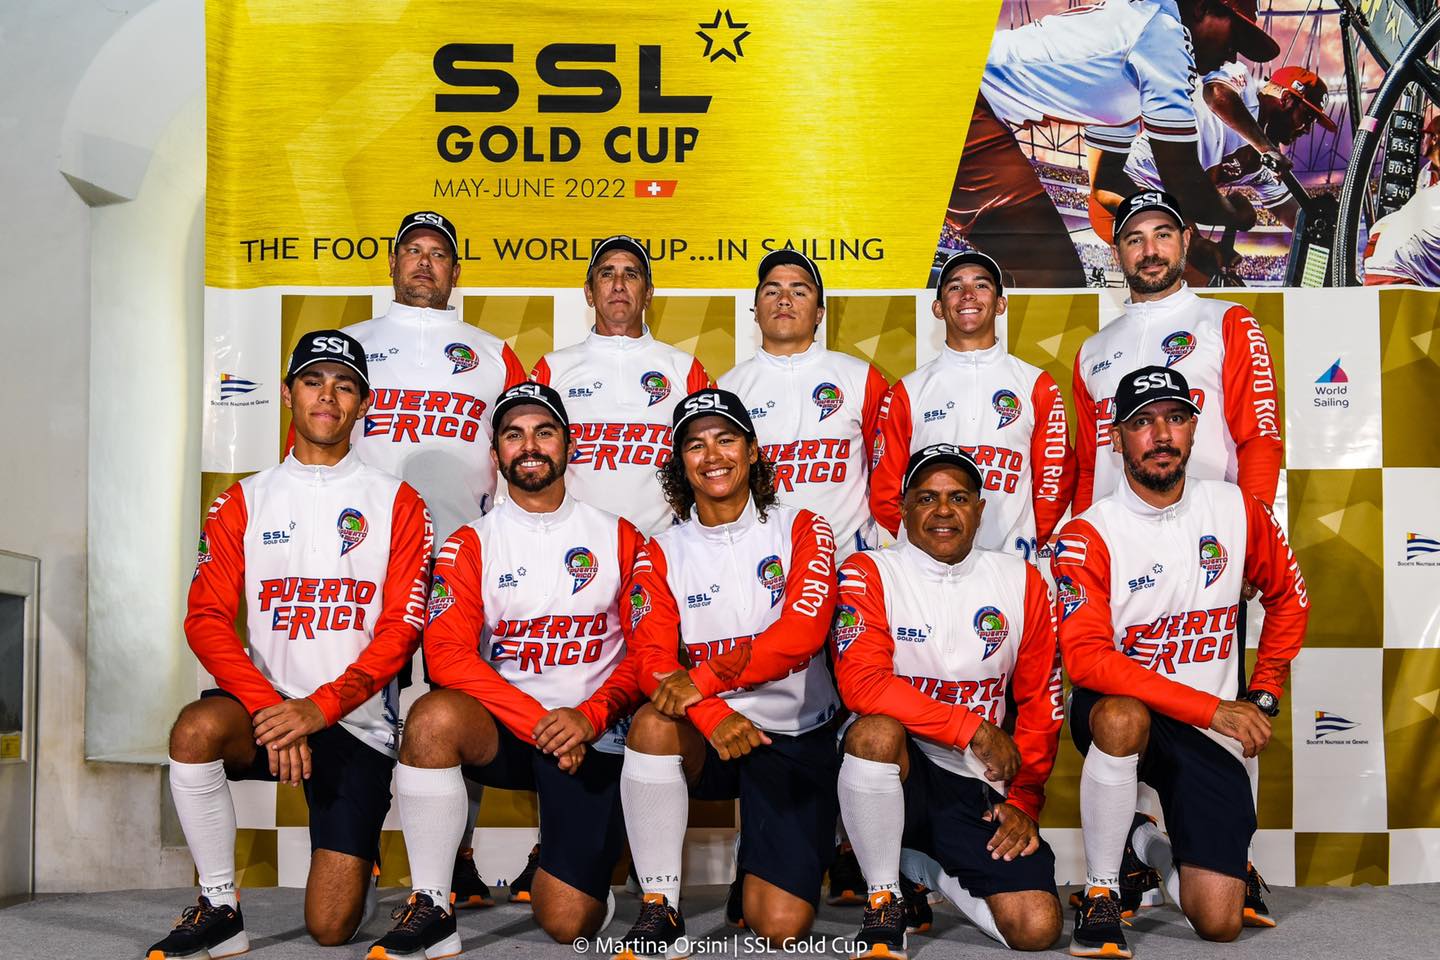 Team Puerto Rico at the SSL Gold Cup Image